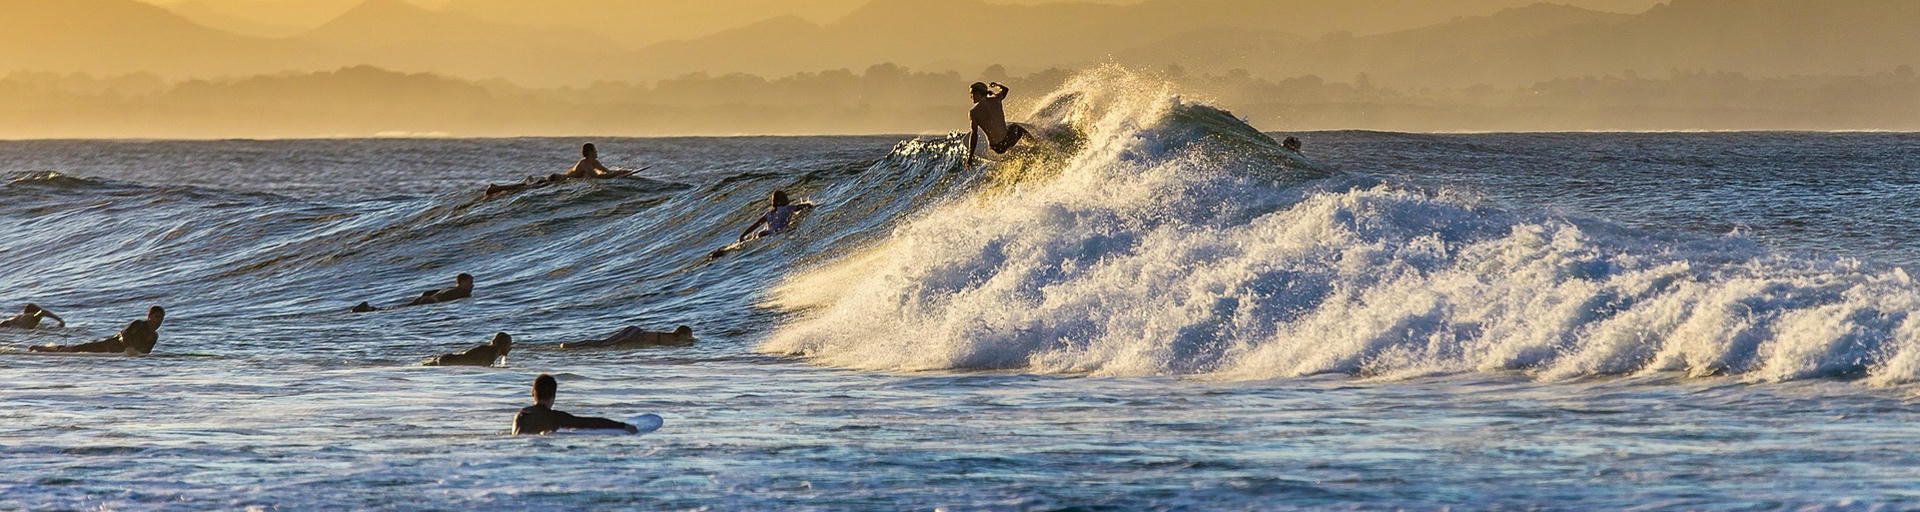 Surfer in den Wellen in Australien